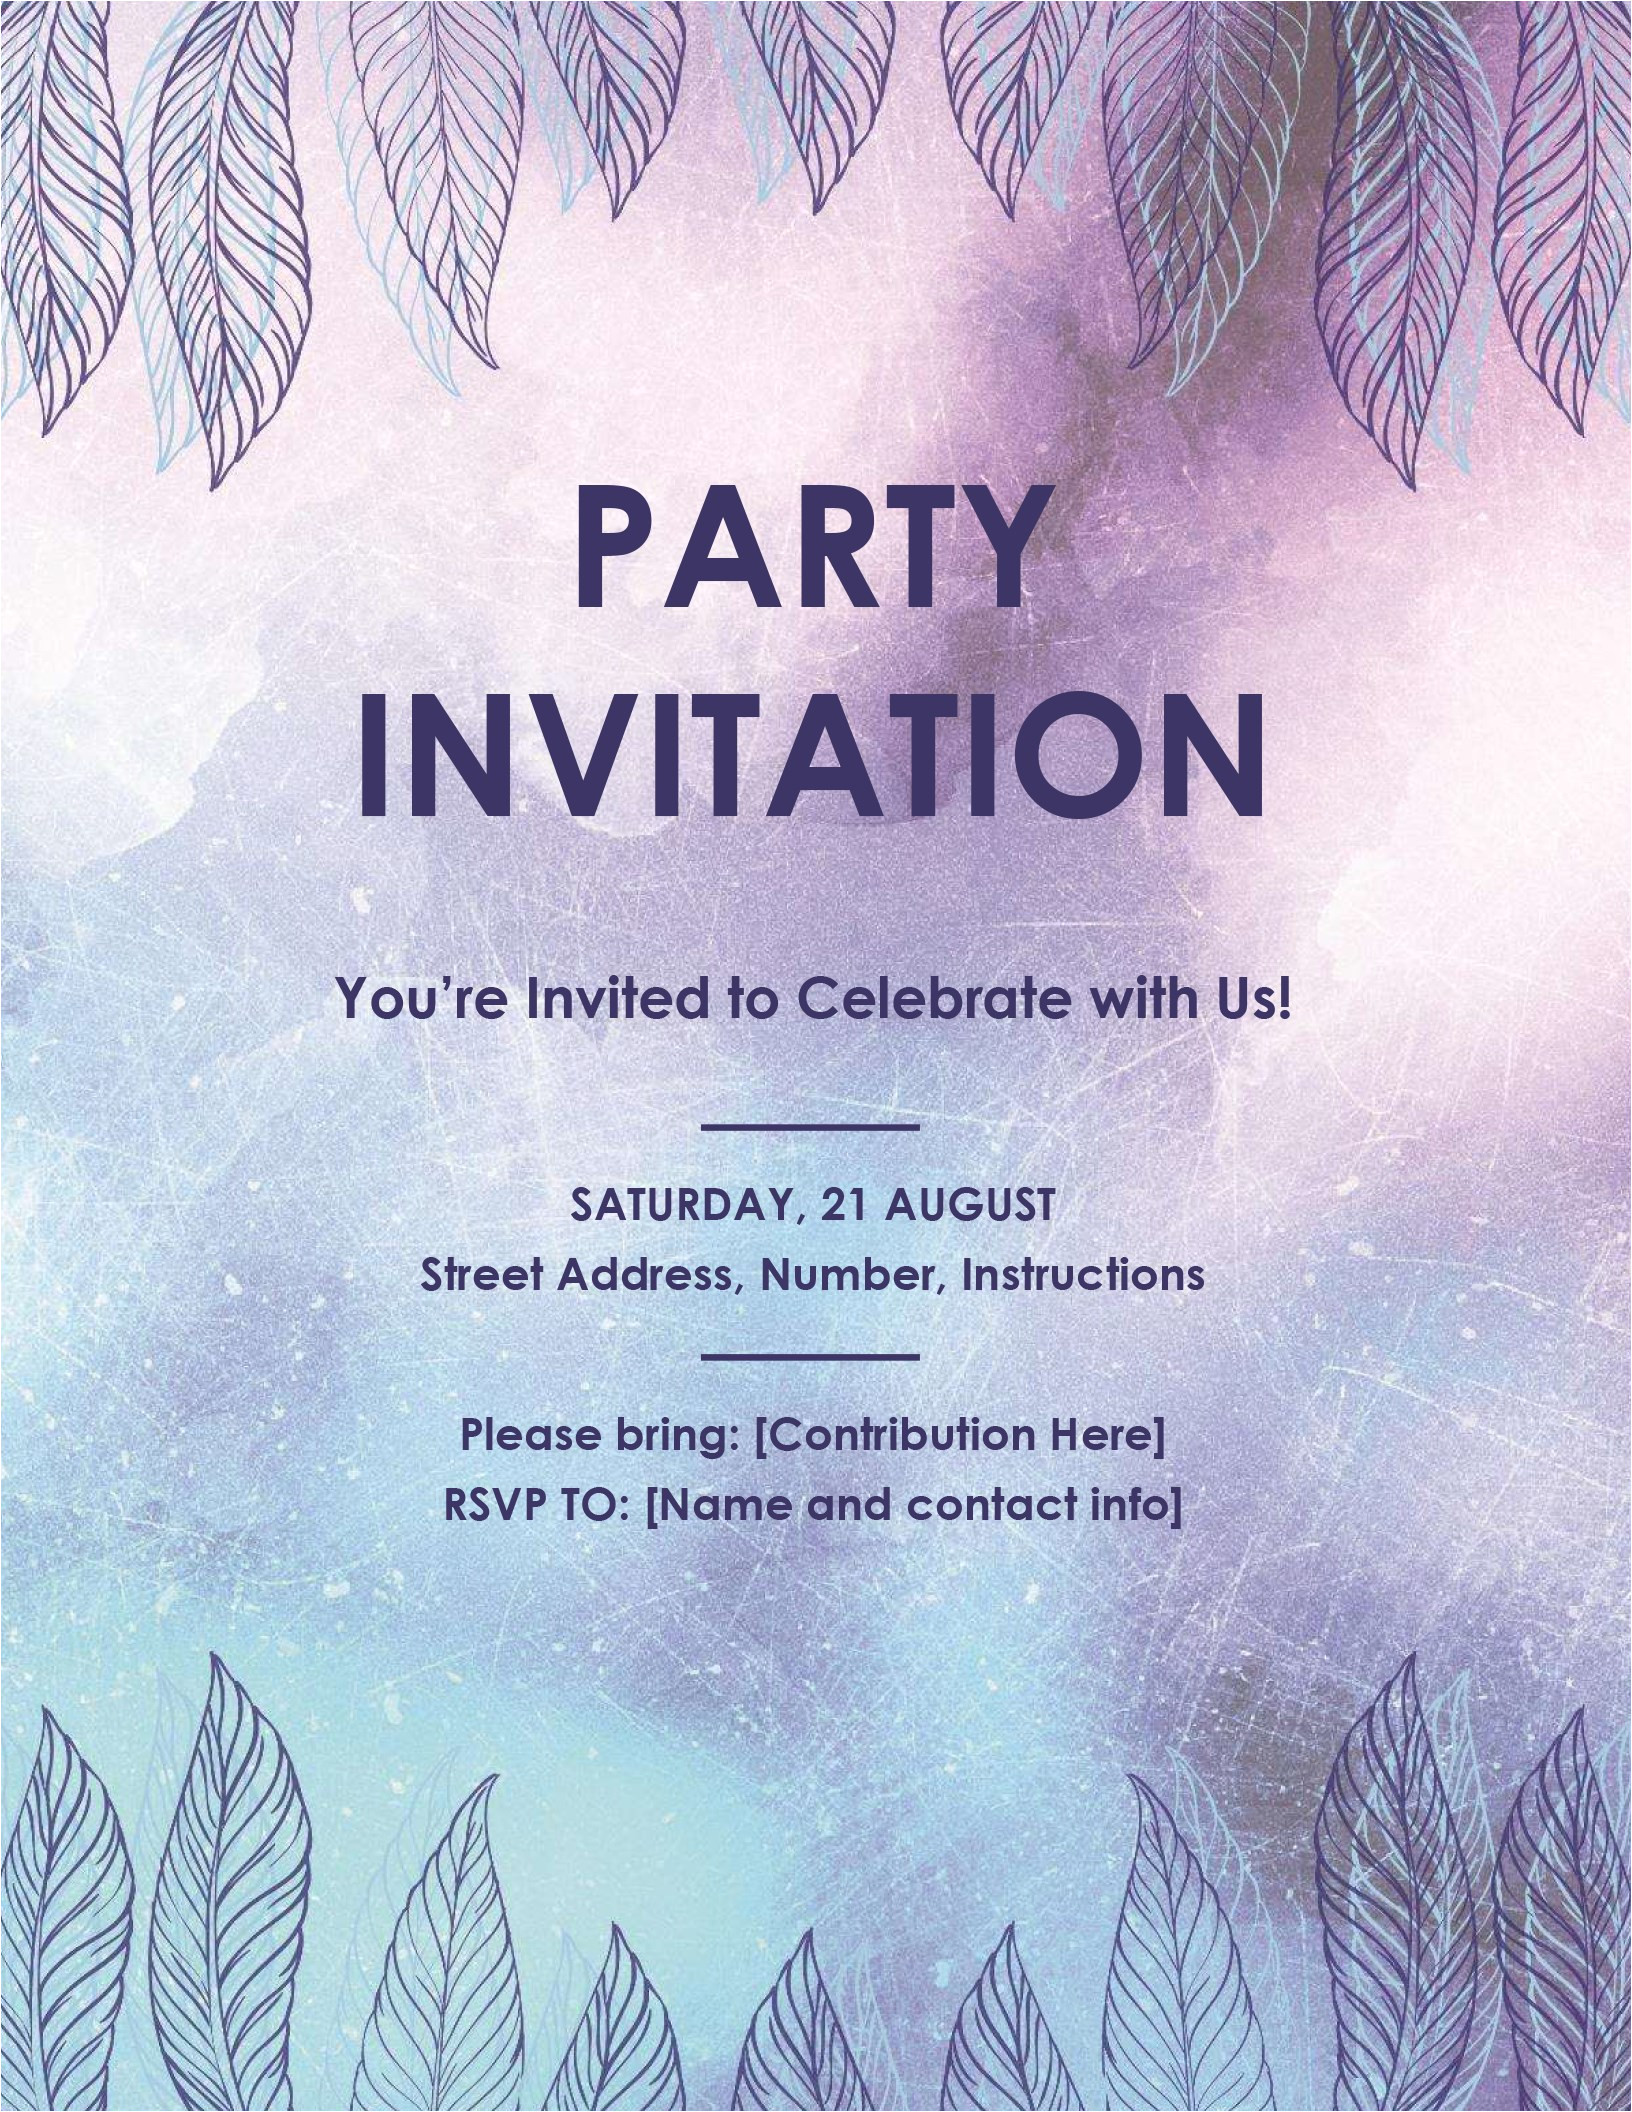 party invitation flyer tm03978815